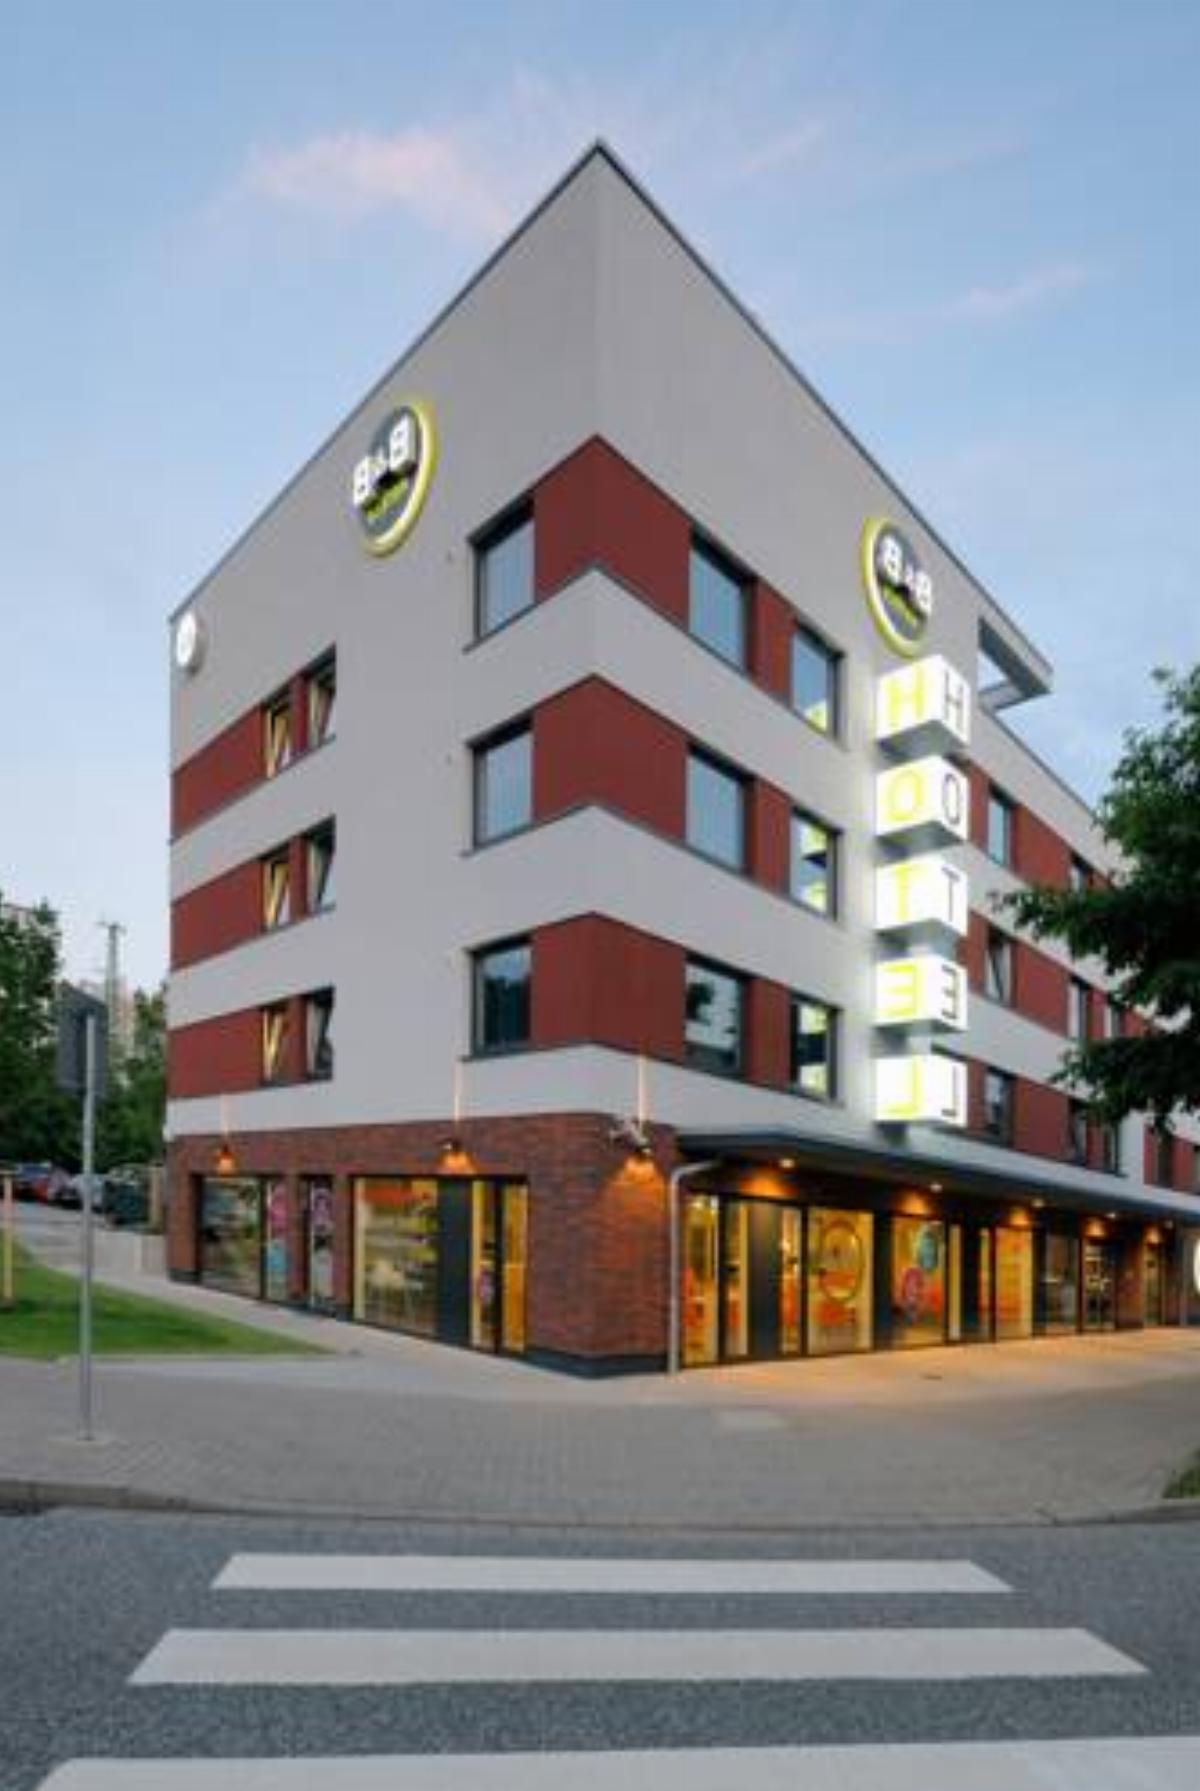 B&B Hotel Kaiserslautern